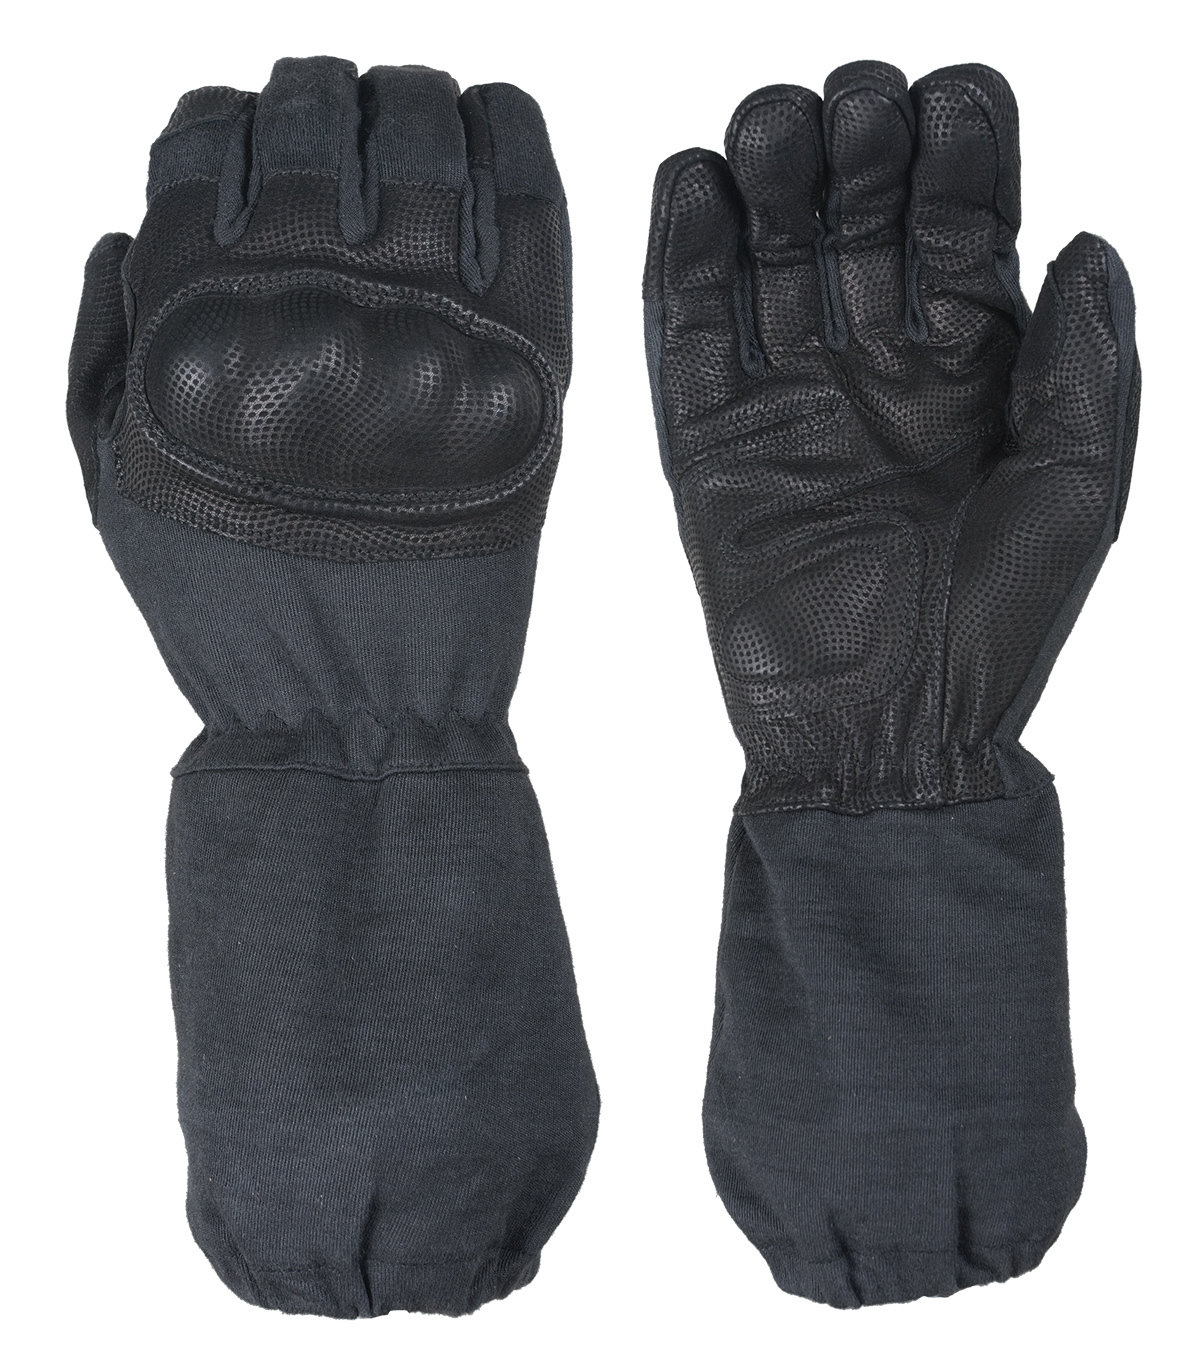 SpecOps™ Cut Resistant Gloves w/ Hard Knuckles